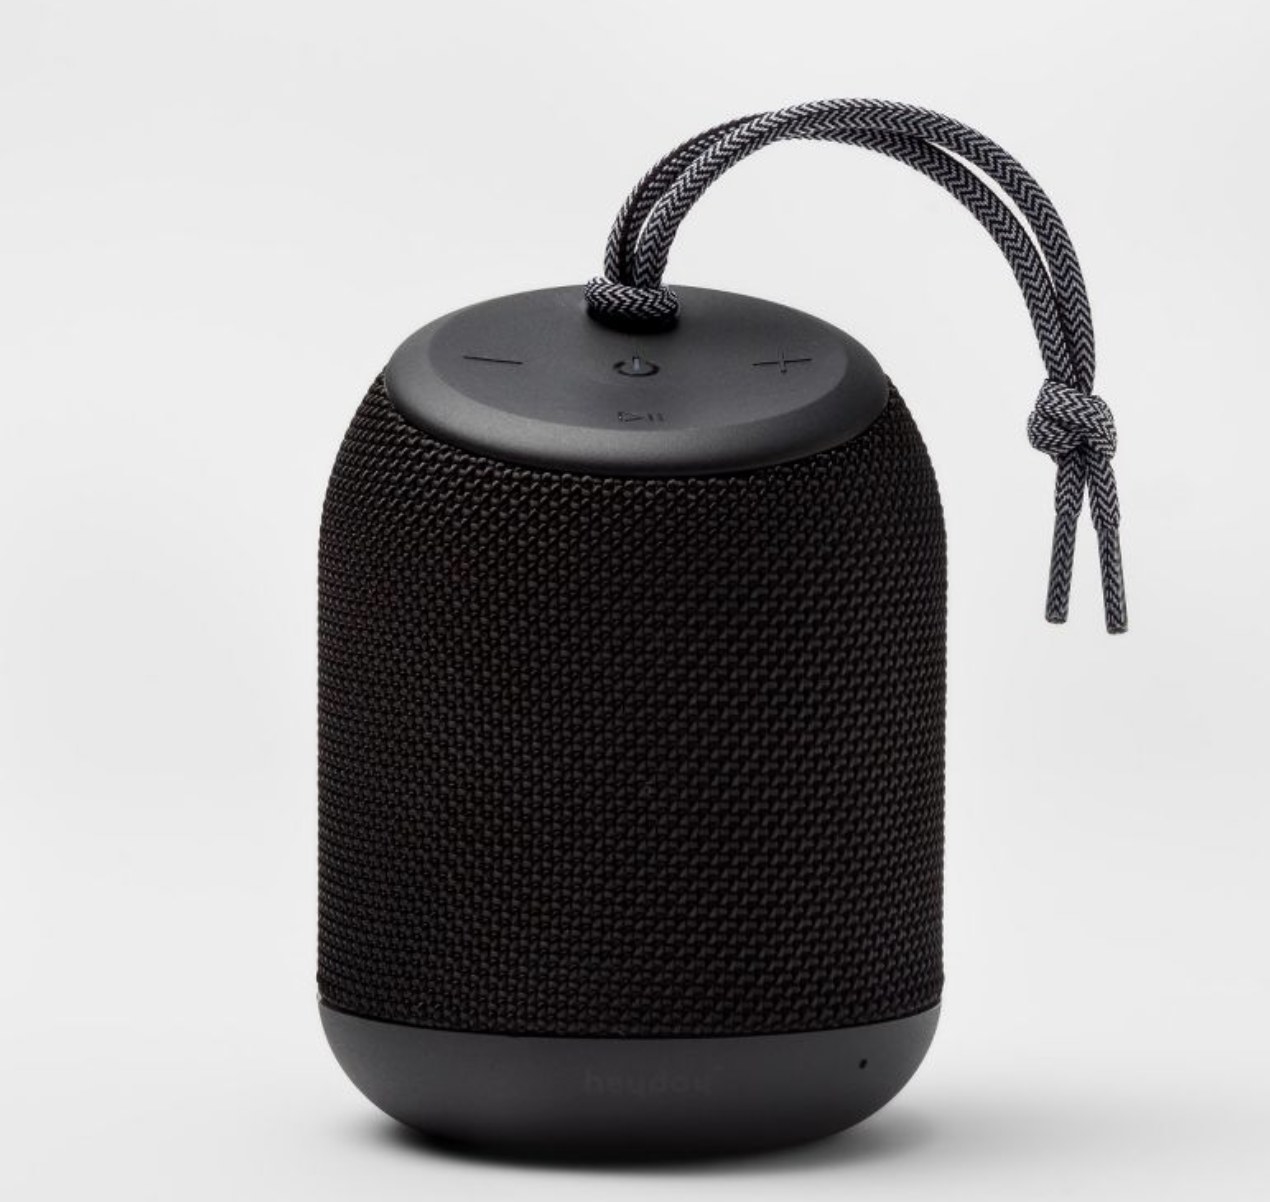 A portable speaker